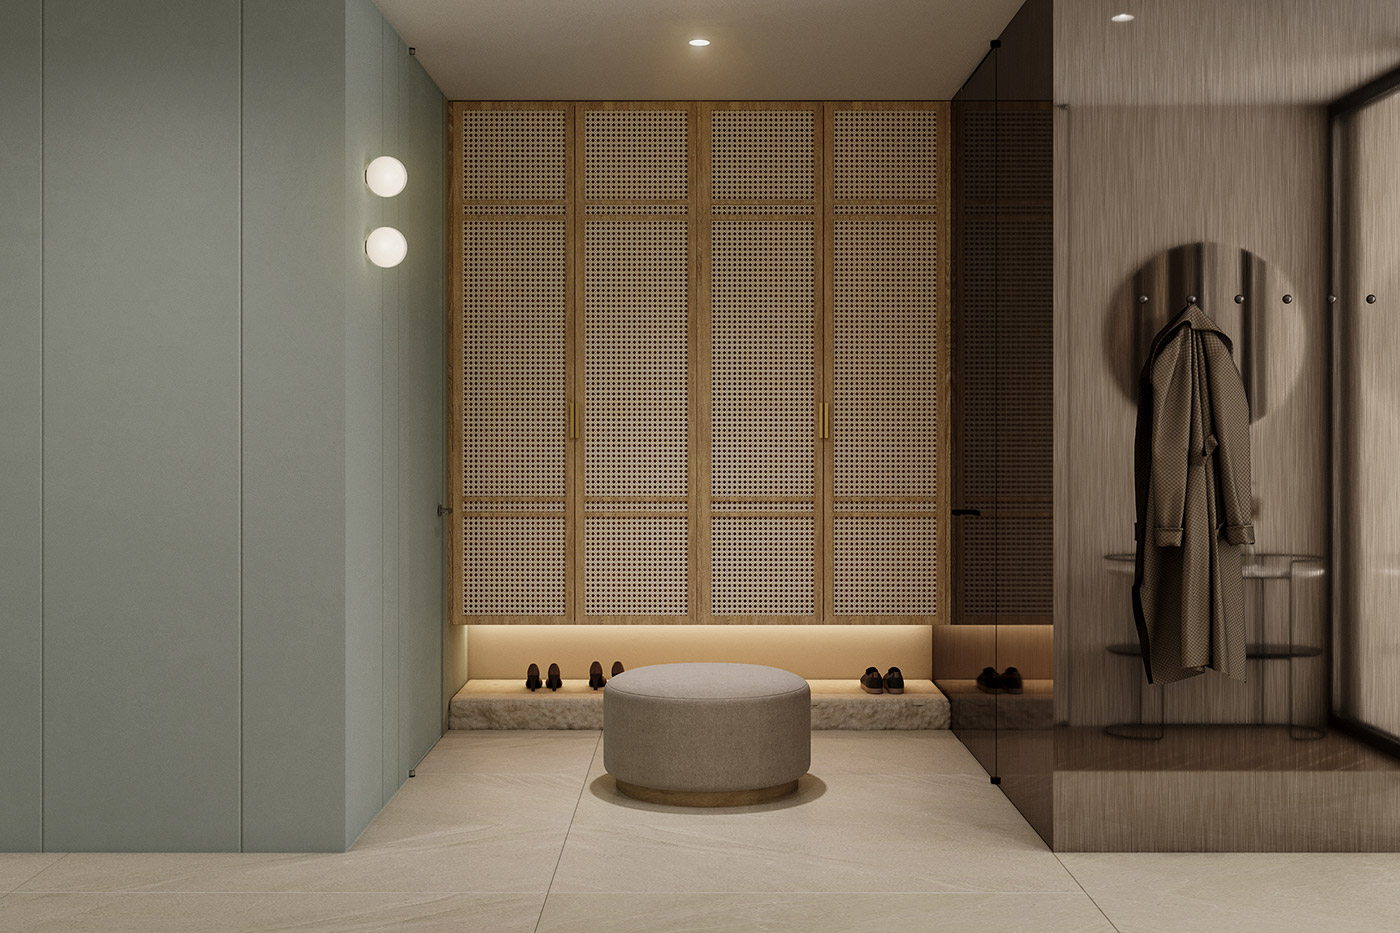 Prostornina | Zen Feel, Family home interior design | 3D visualisations: Maria Sidorova